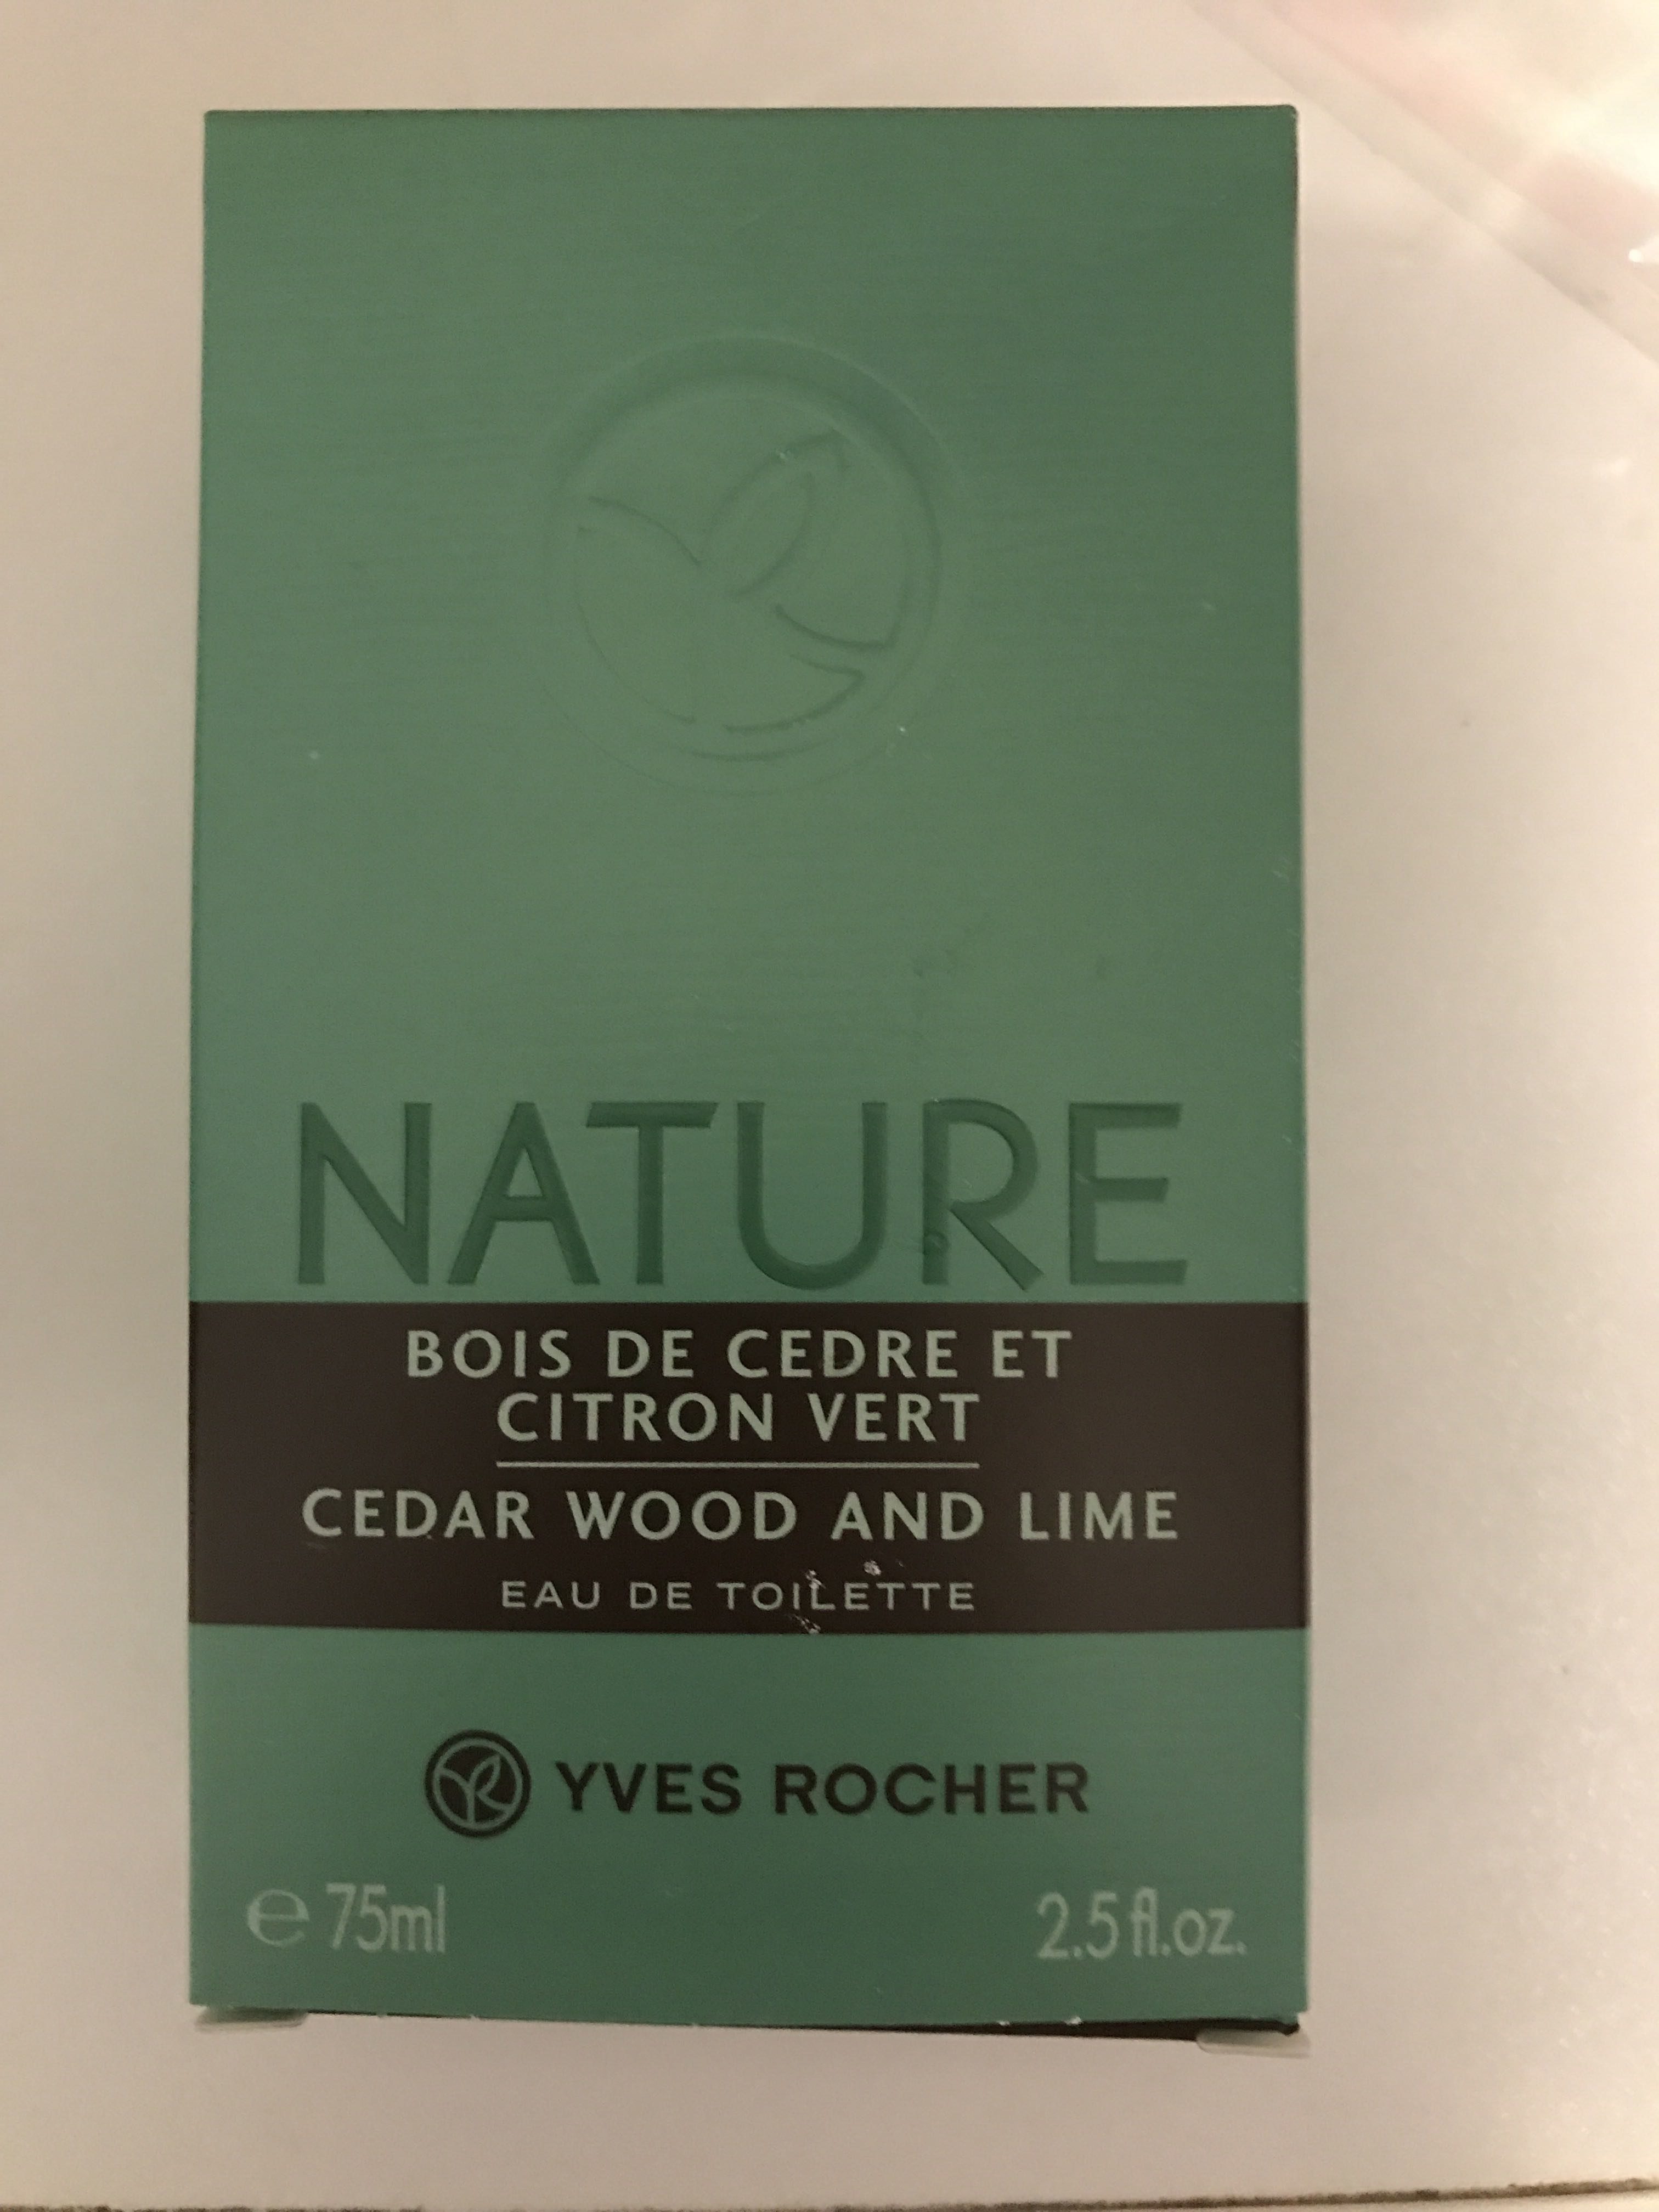 Nature Bois de cèdre et Citron vert - Yves Rocher - 75 ml